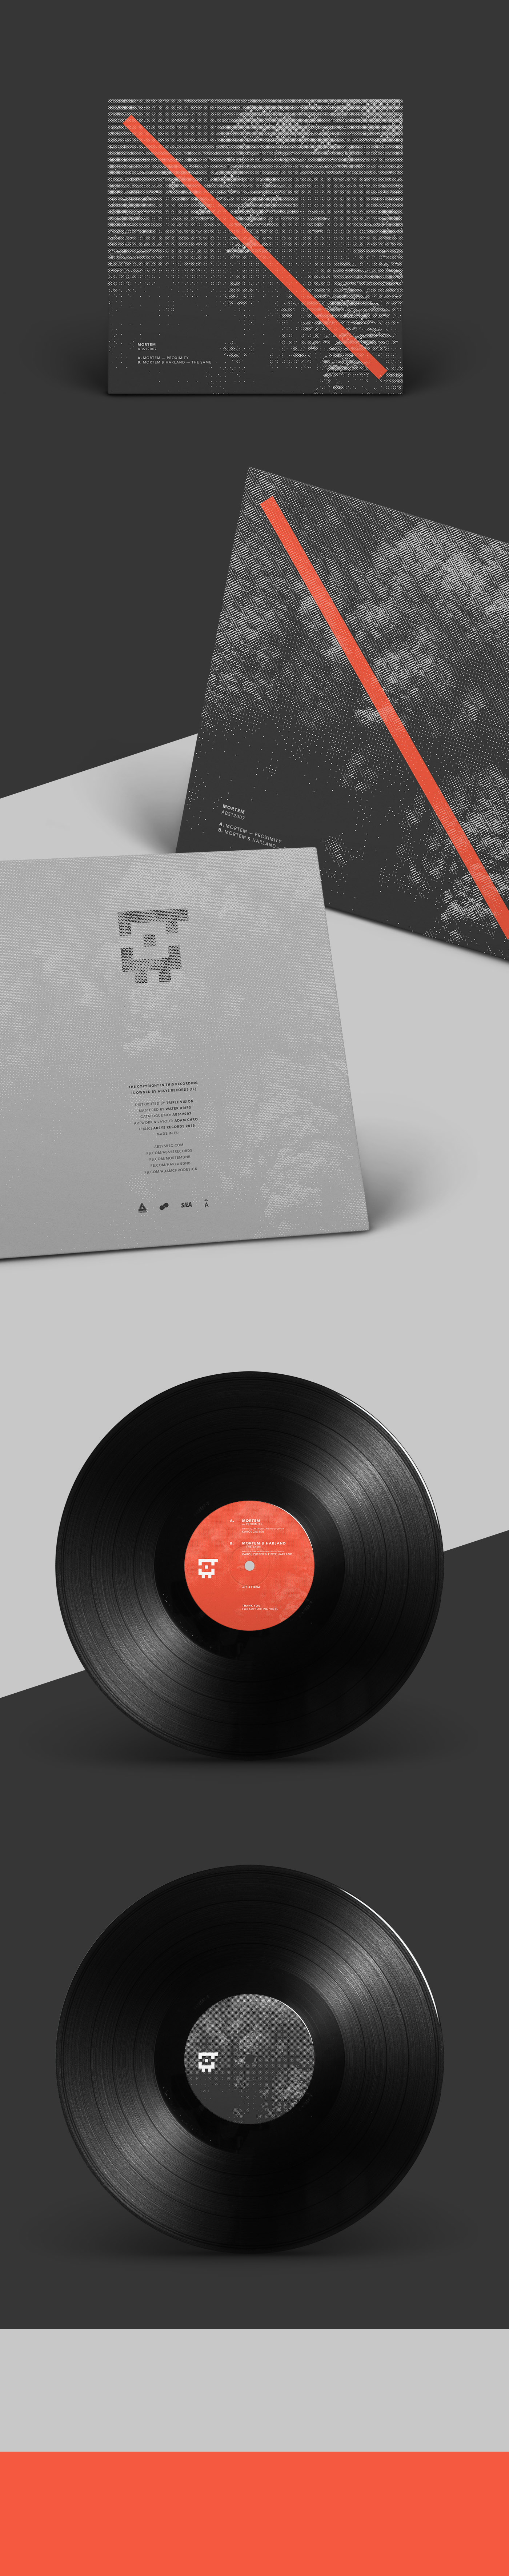 vinyl design graphic digital MORTEM Harland absys Records Adam chrobak